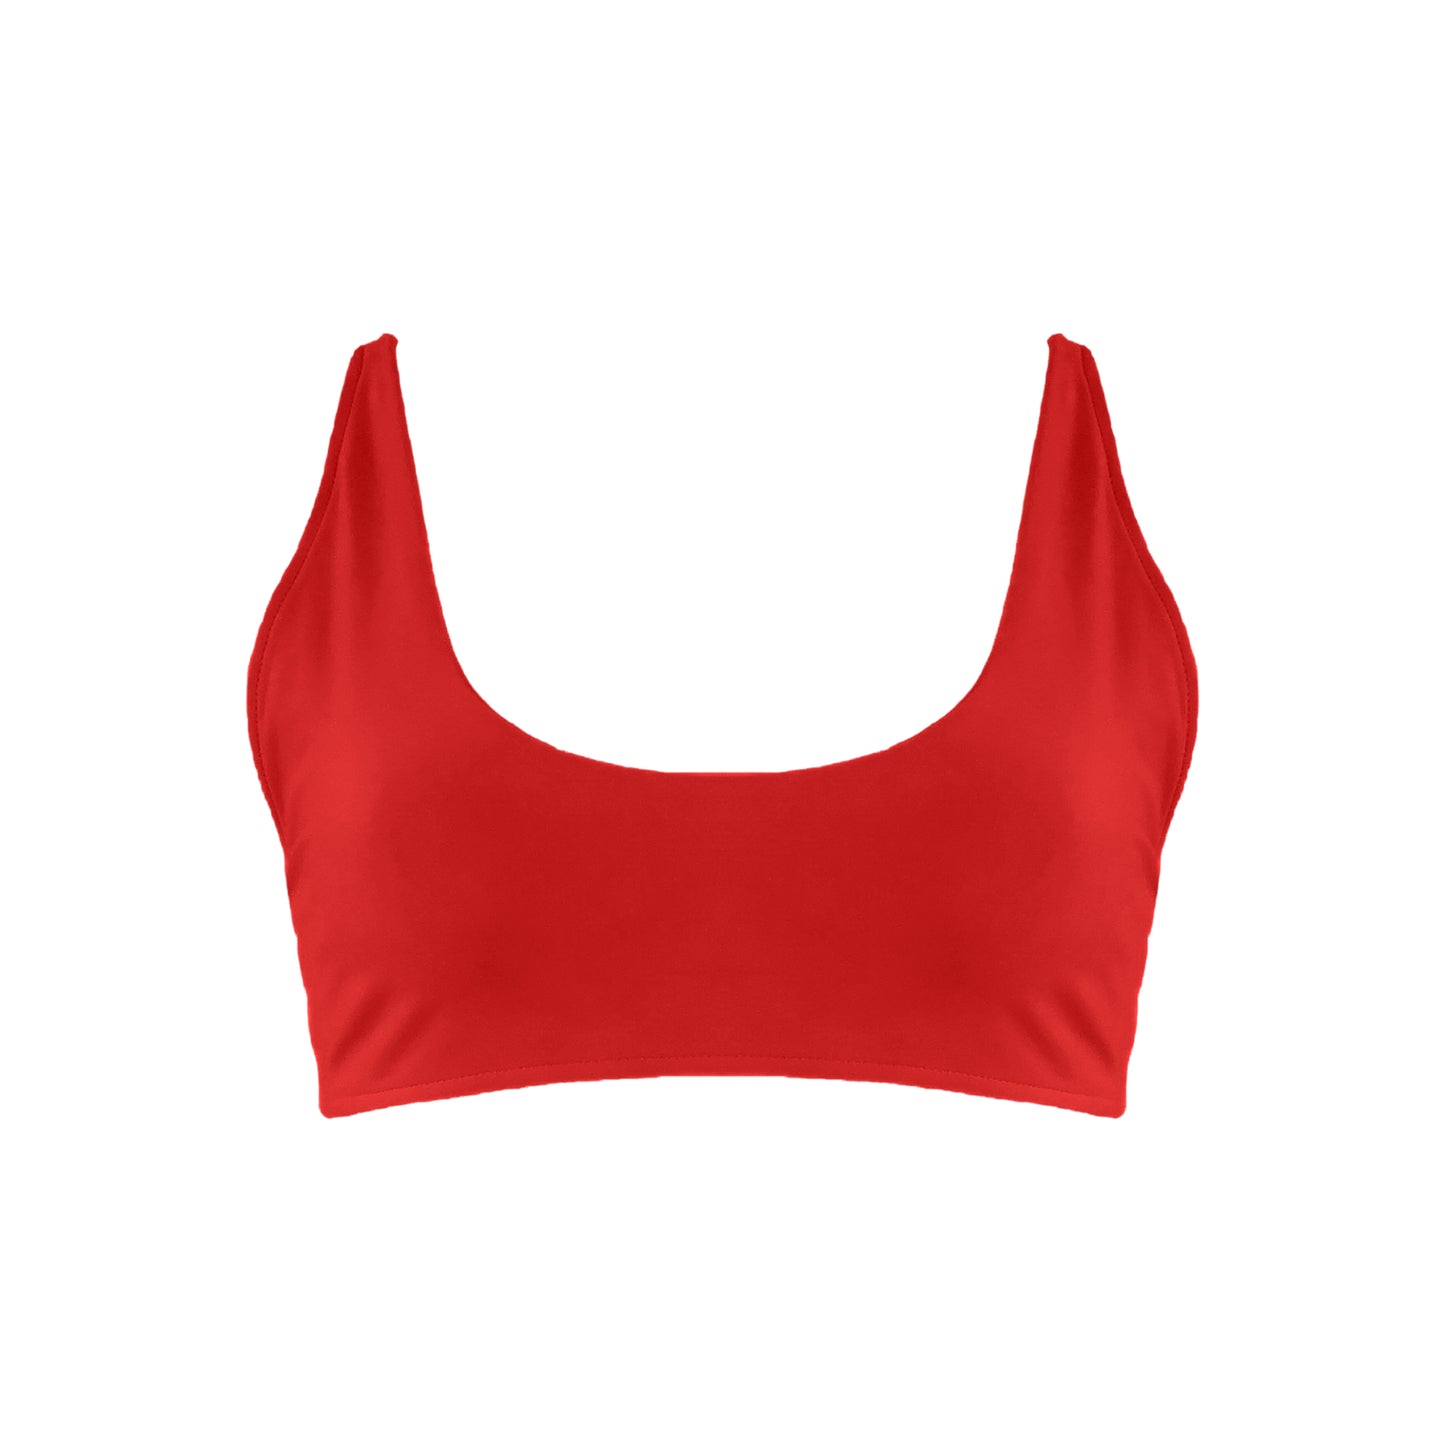 Red Scoop neck bralette style bikini top.